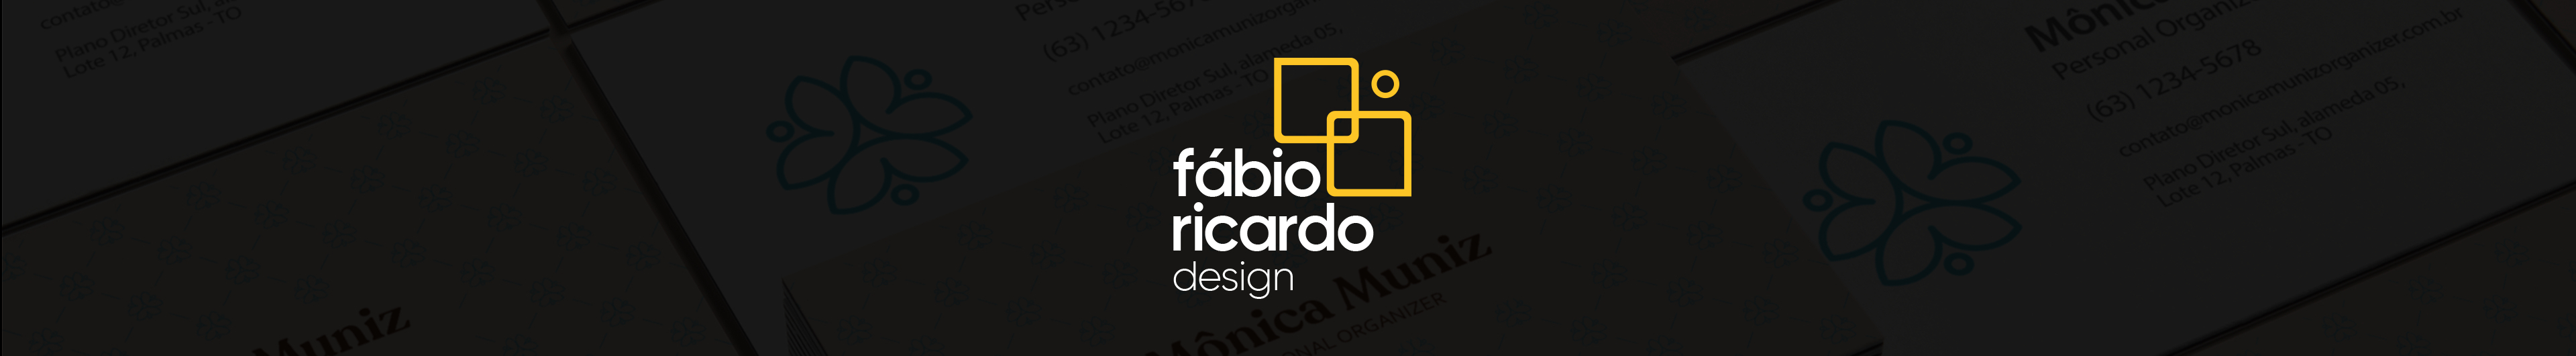 Fábio Ricardo's profile banner